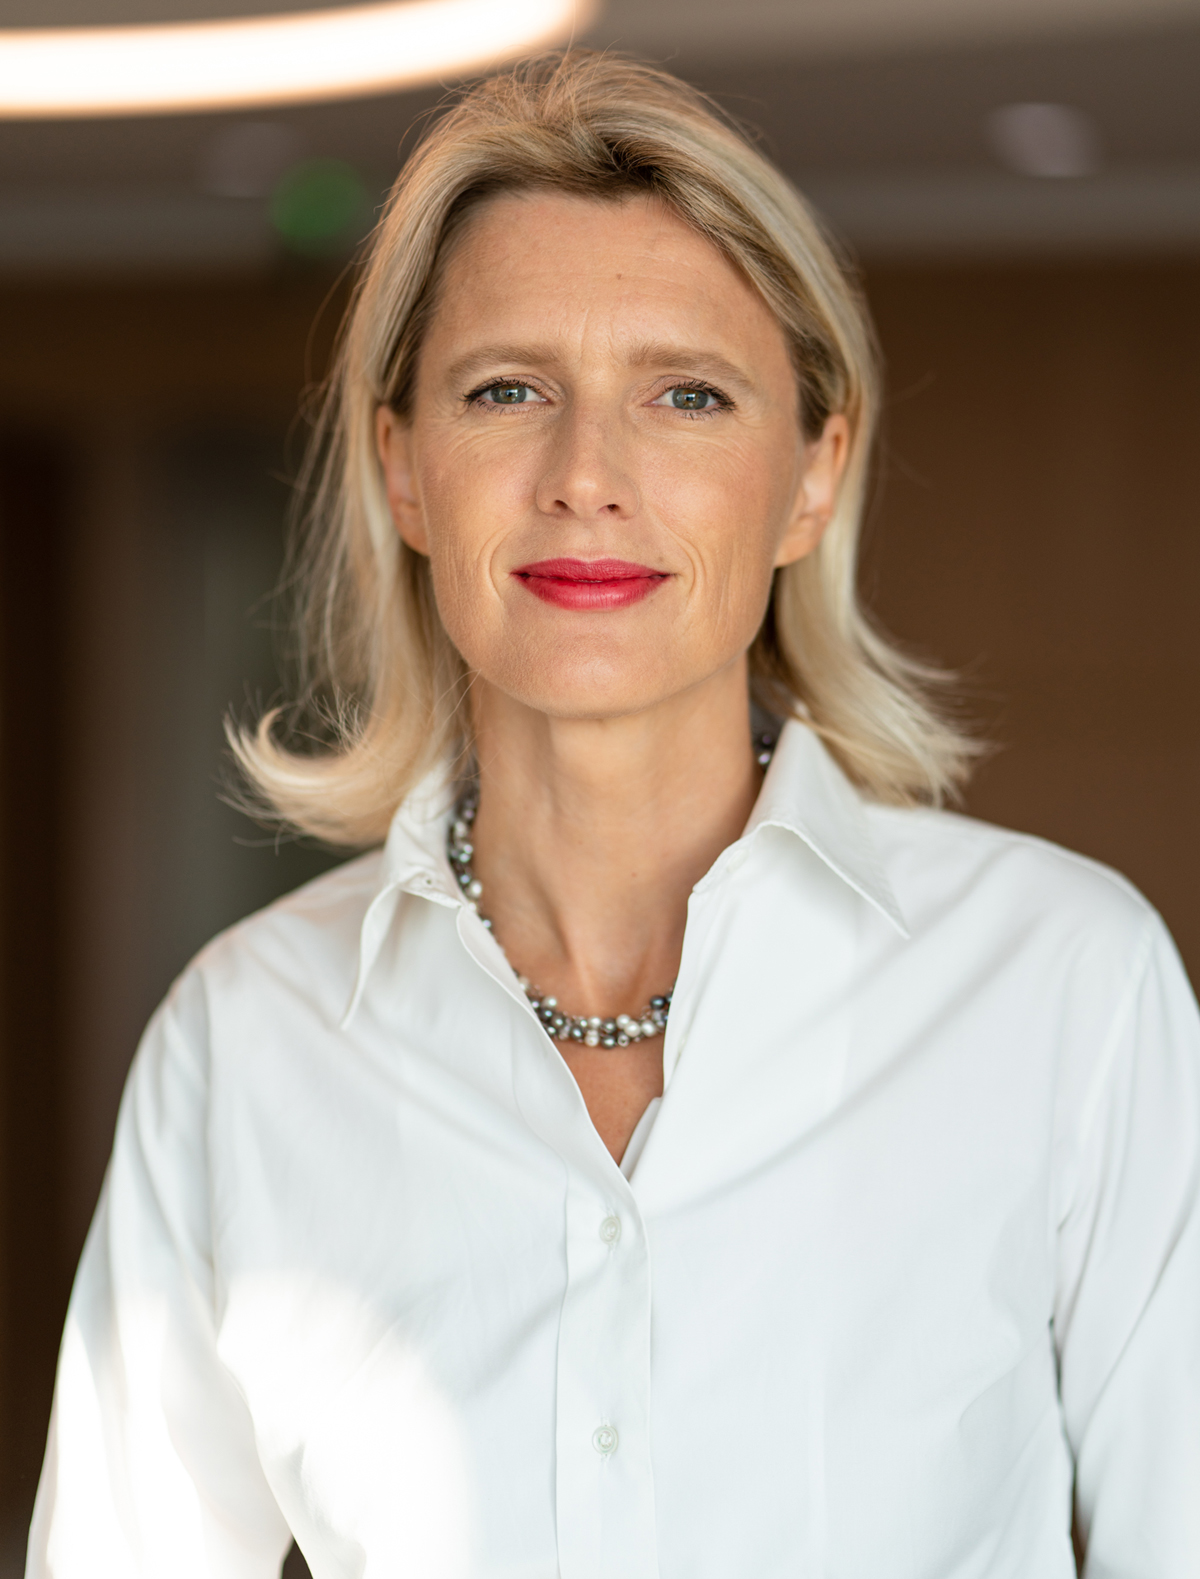 Allianz Euler Hermes CEO Clarisse Kopff